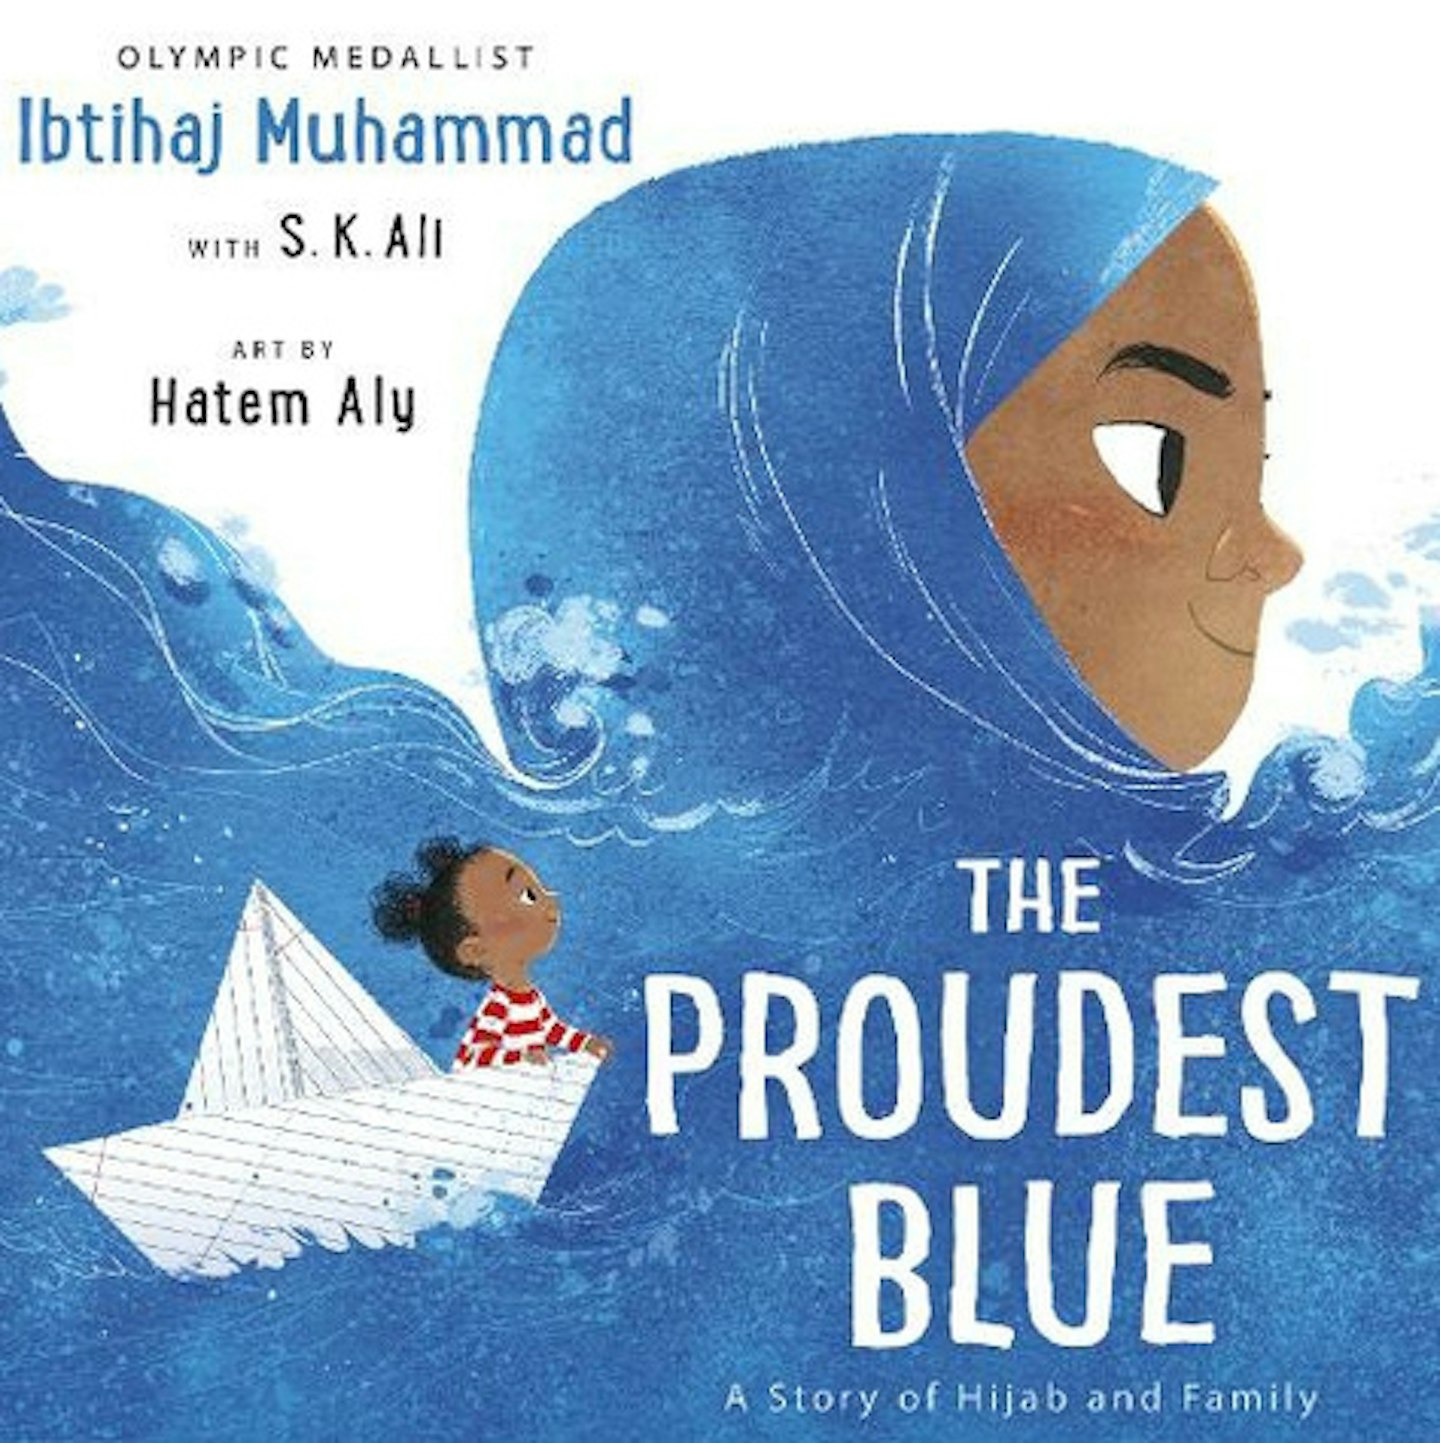 The Proudest Blue by Ibtihaj Muhammad